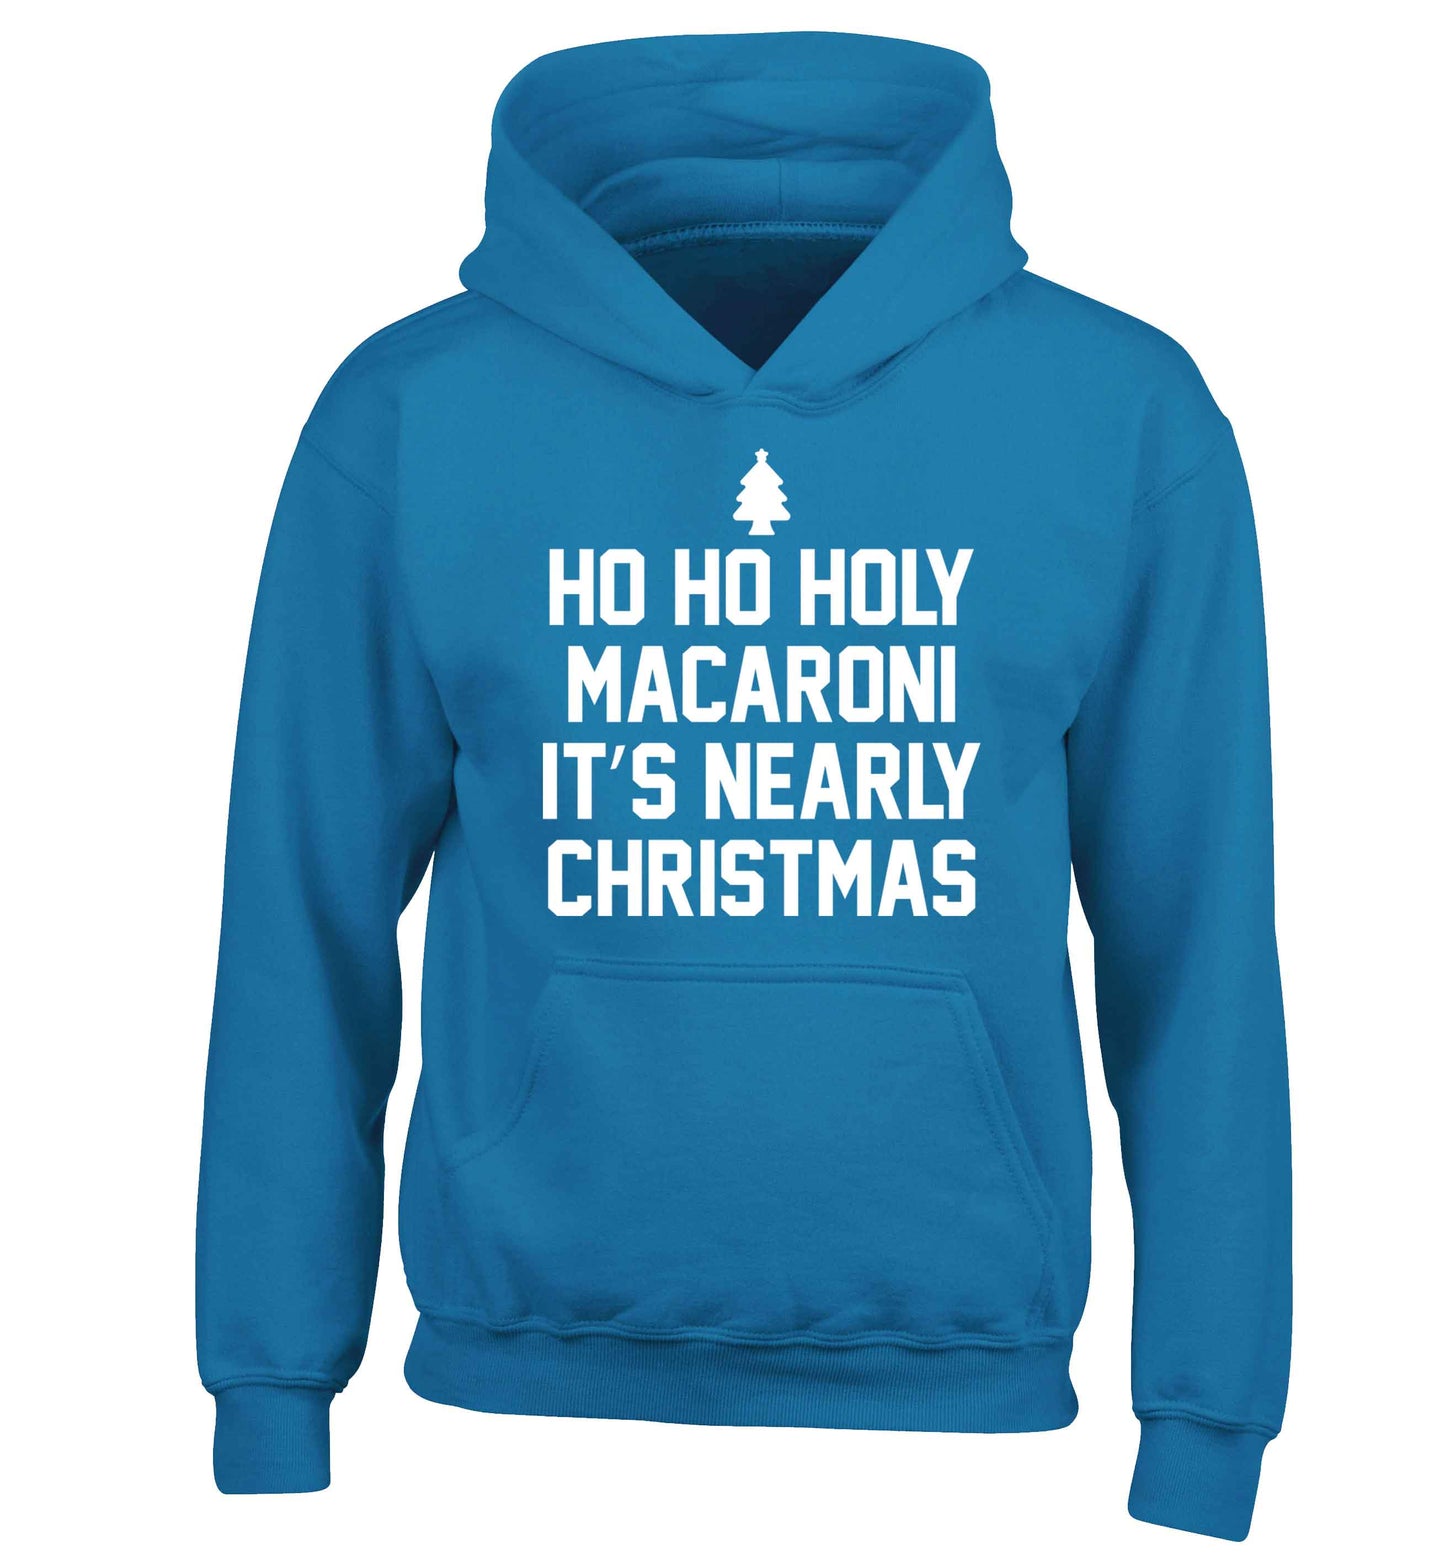 Ho ho holy macaroni it's nearly Christmas children's blue hoodie 12-13 Years